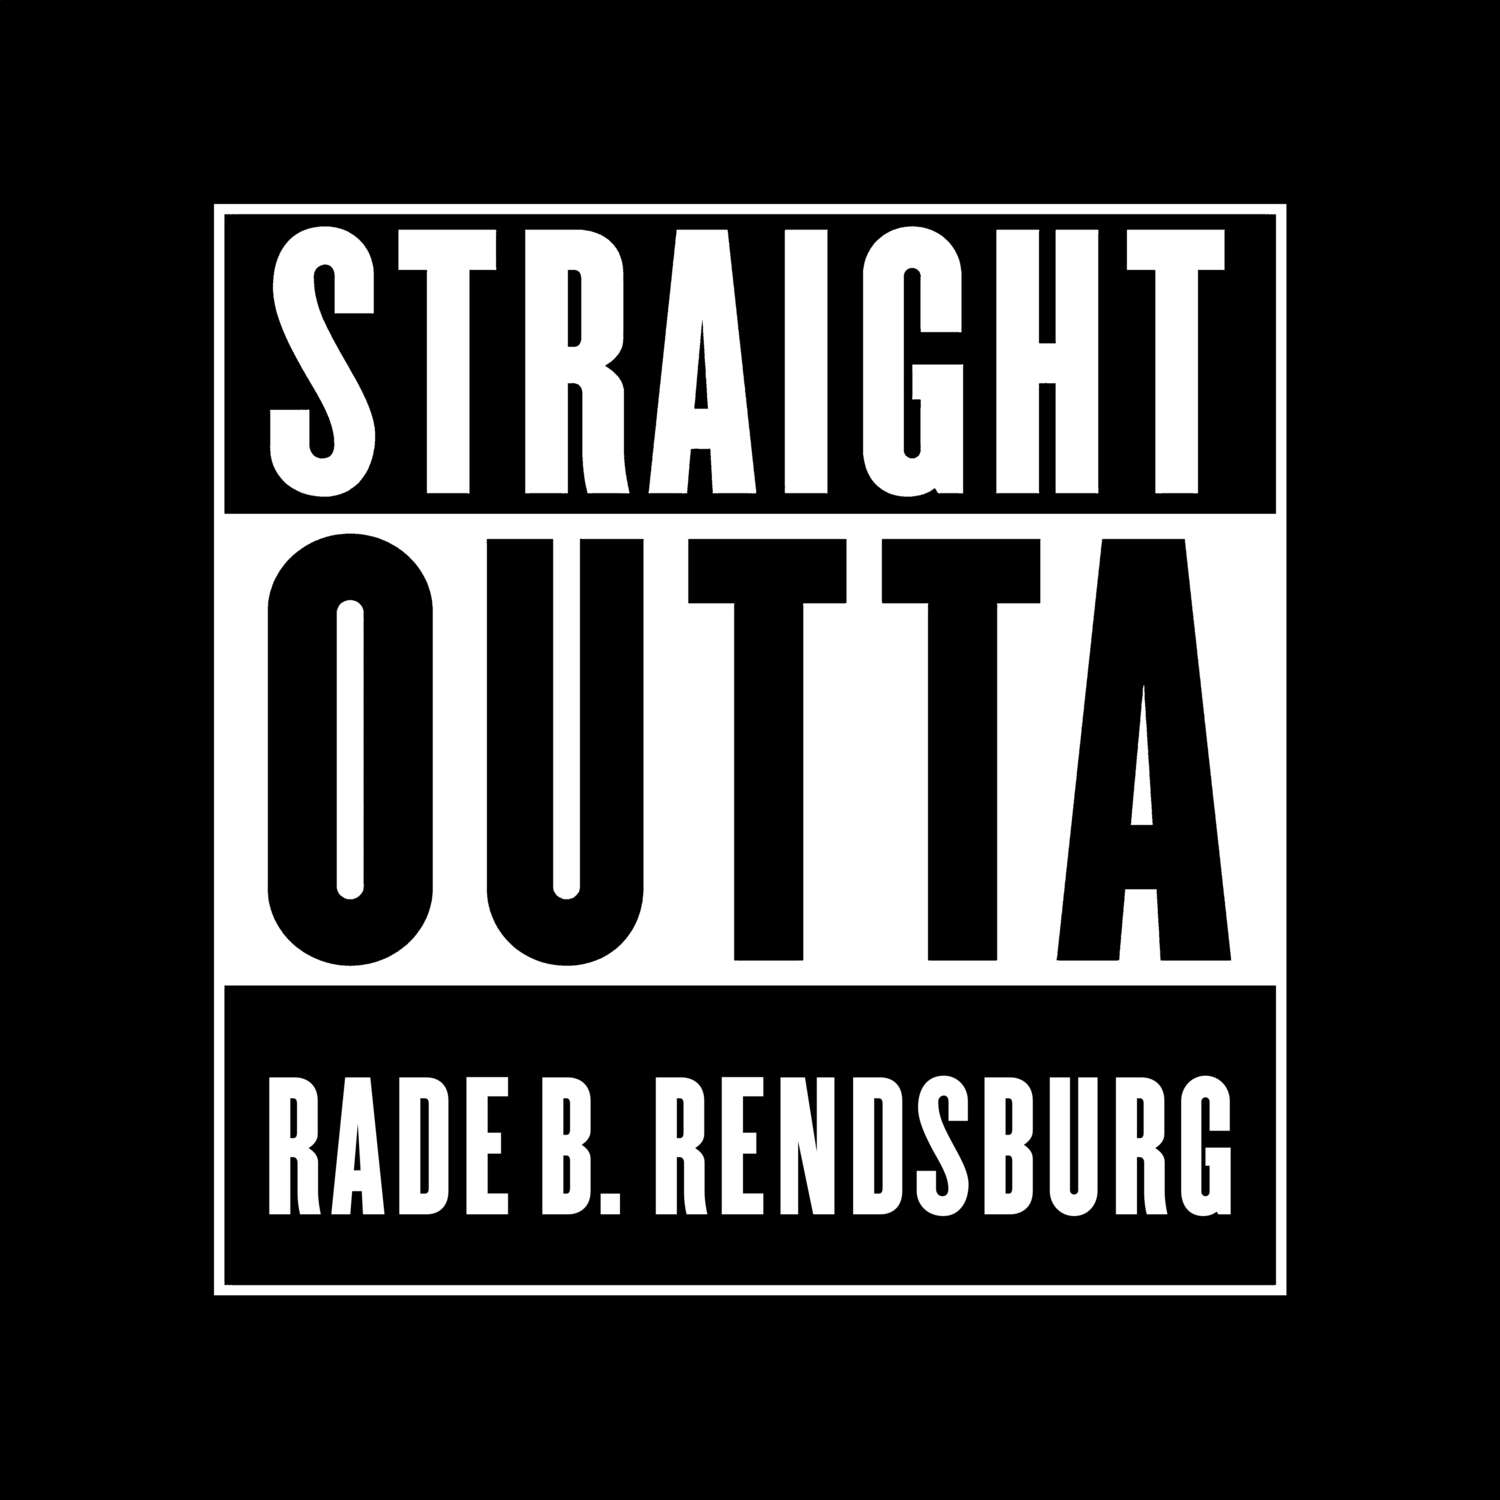 Rade b. Rendsburg T-Shirt »Straight Outta«